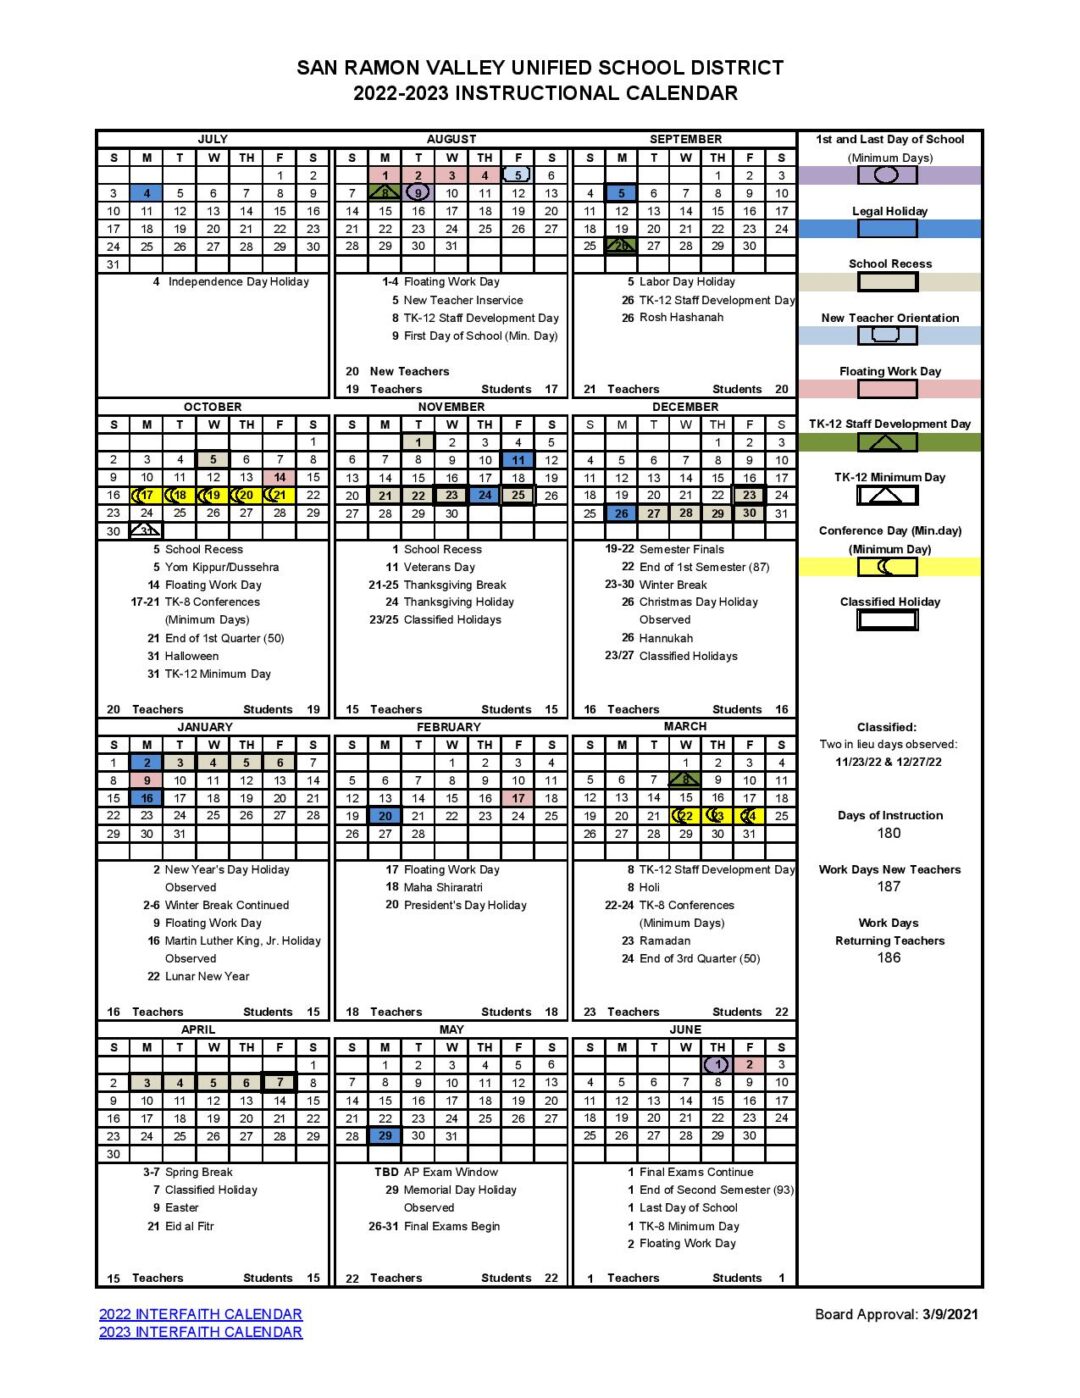 San Ramon Valley Unified School District Calendar 20222023